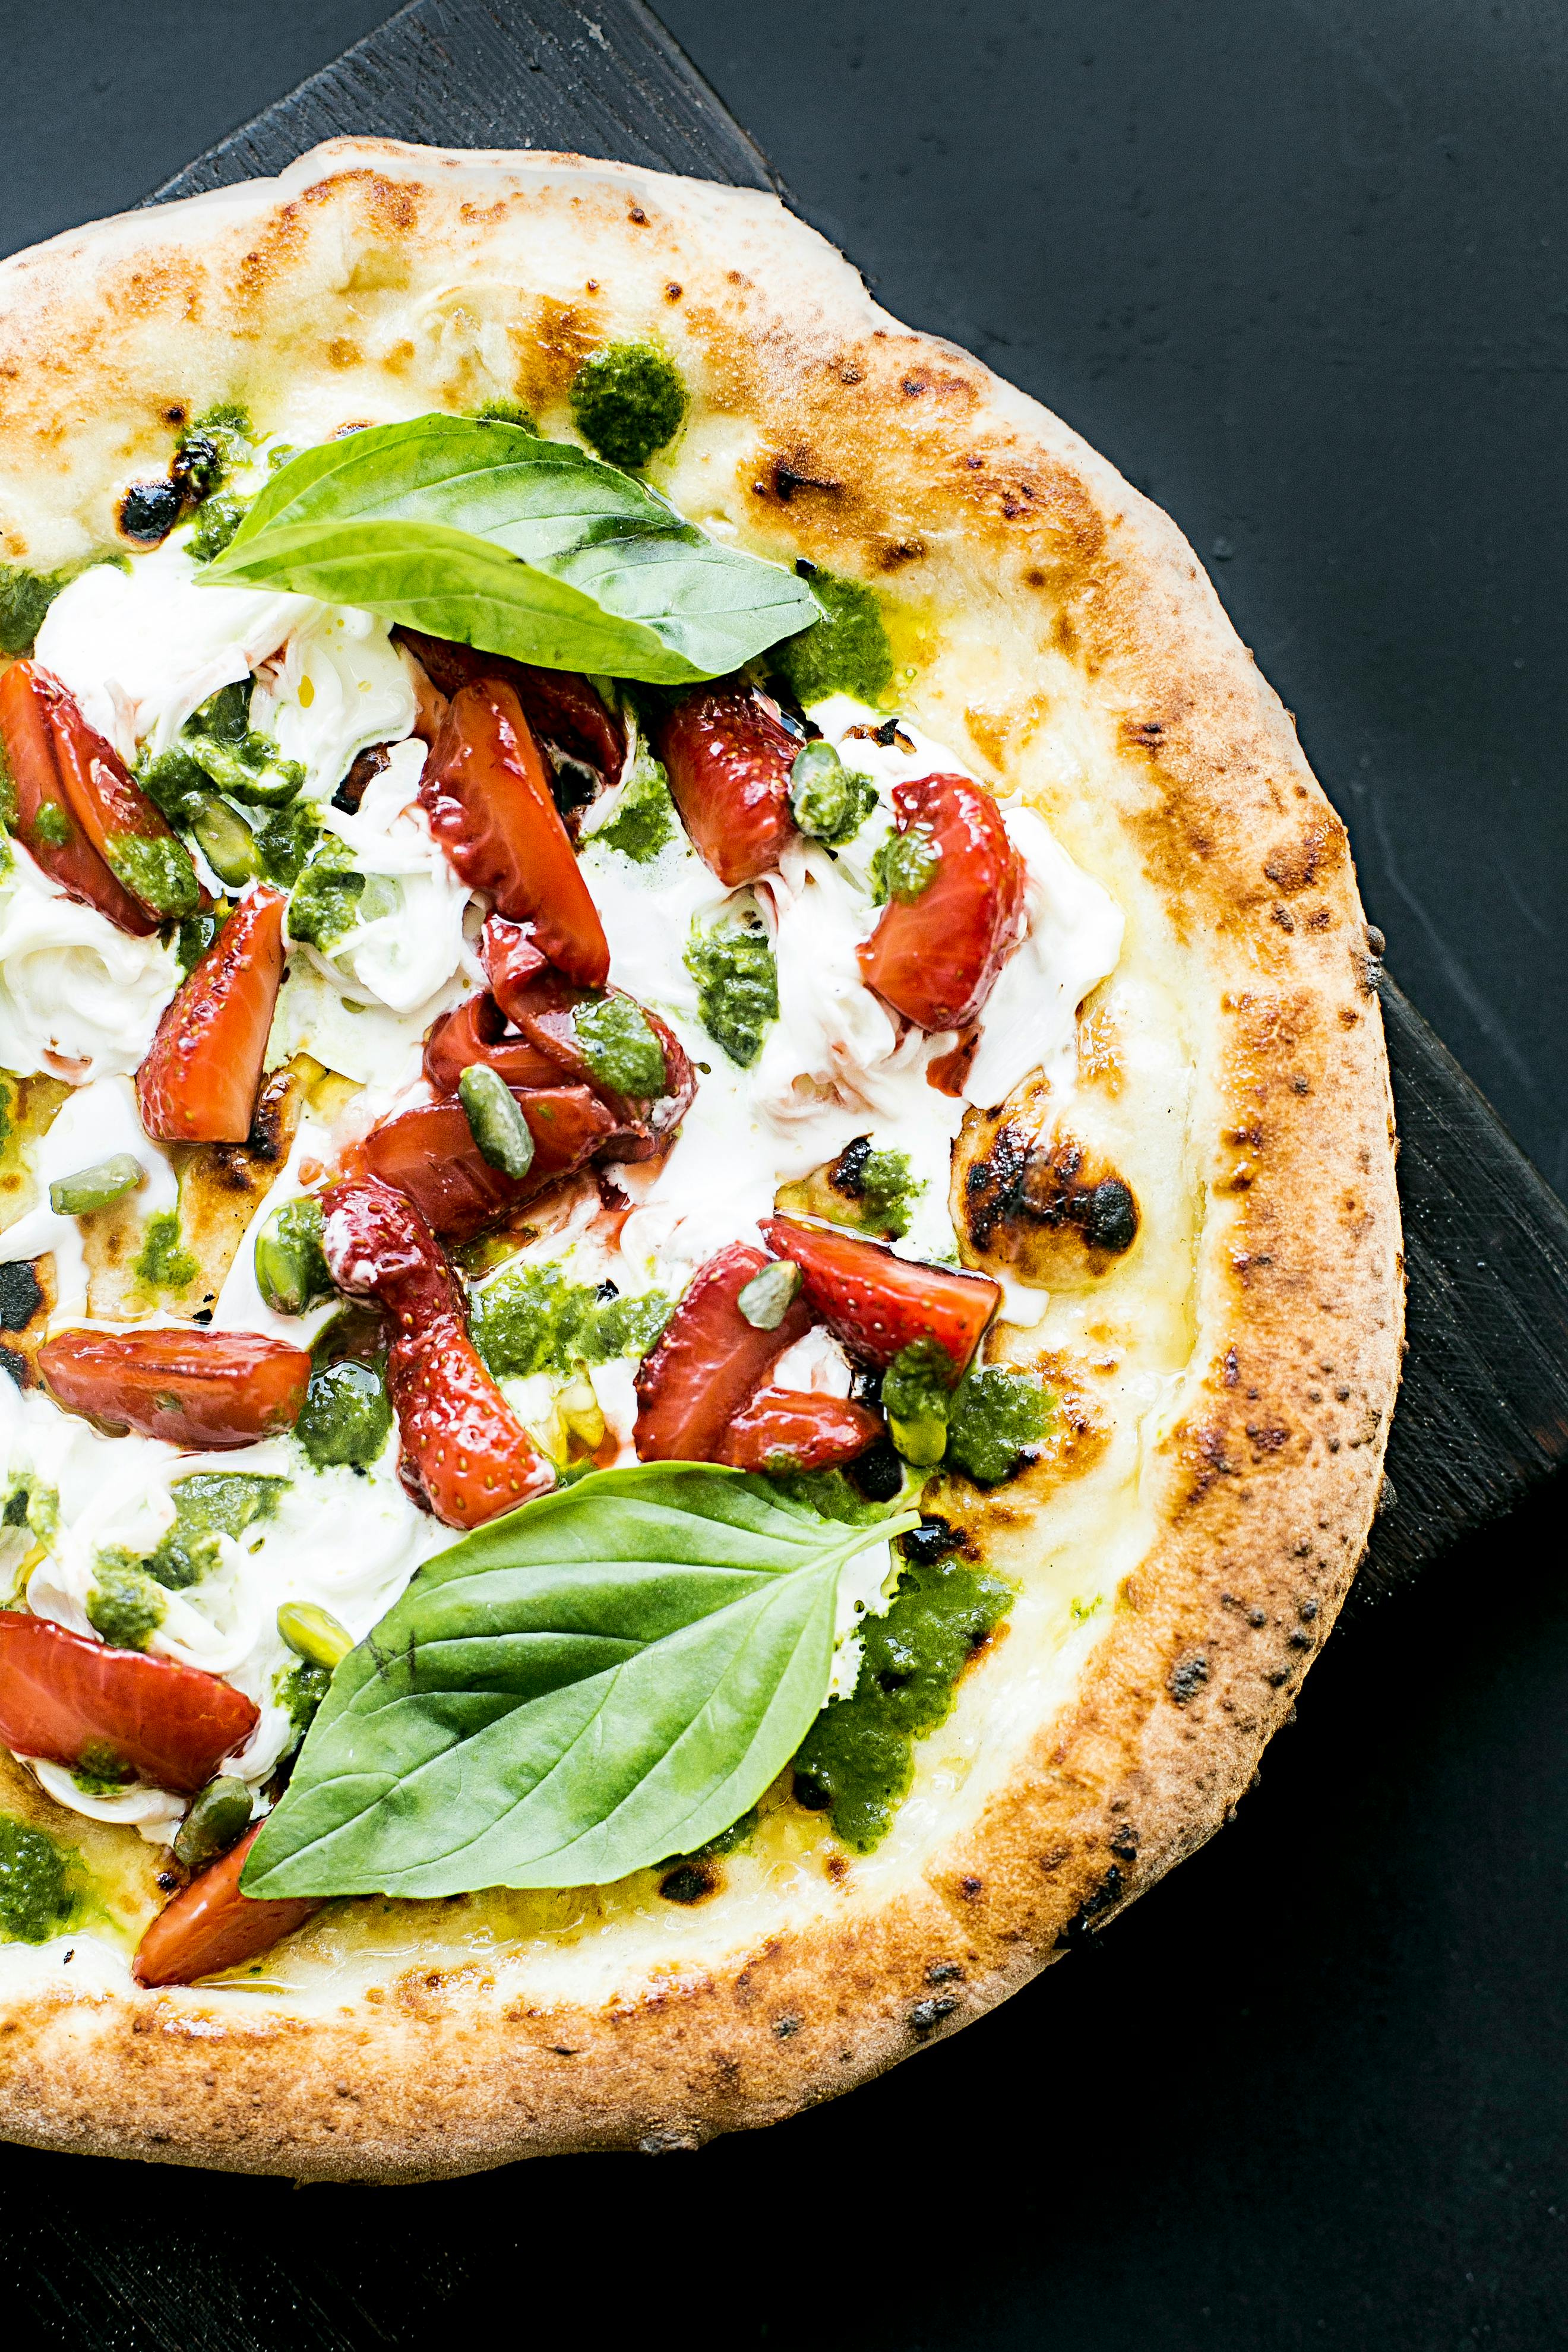 Pepperoni Pizza With Basil Leaves · Free Stock Photo - 2640 x 3960 jpeg 2845kB